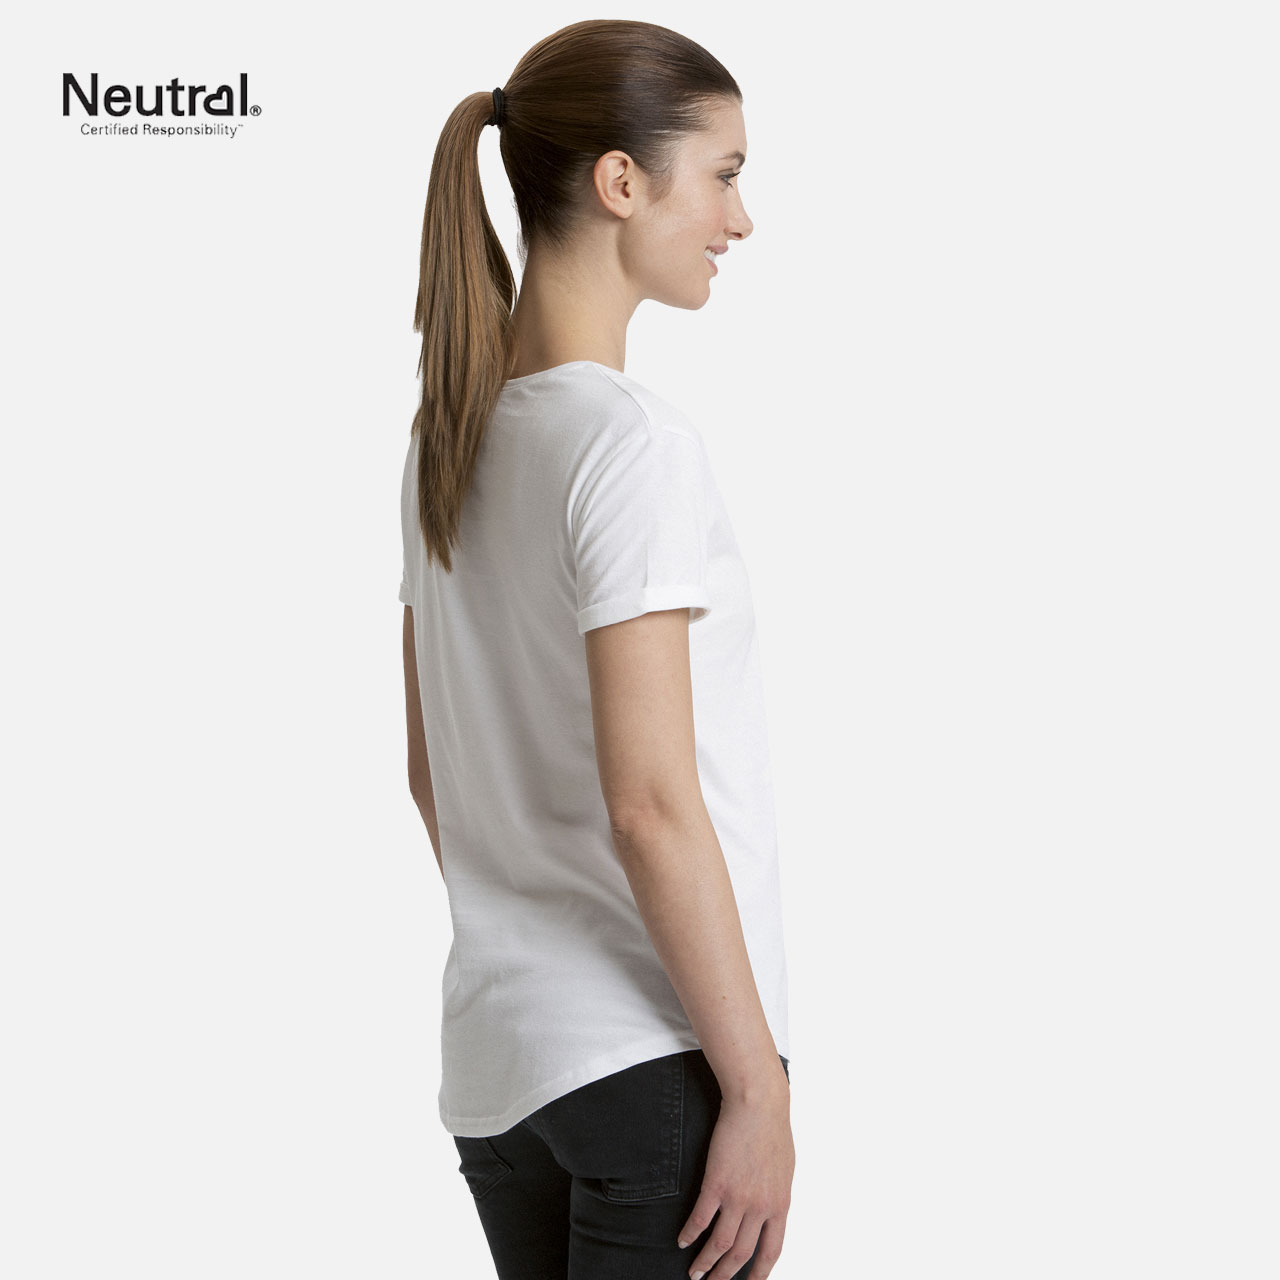 Doppelpack Ladies Roll Up Sleeve T-Shirt - Weiß / Navy XL Weiss / Navy